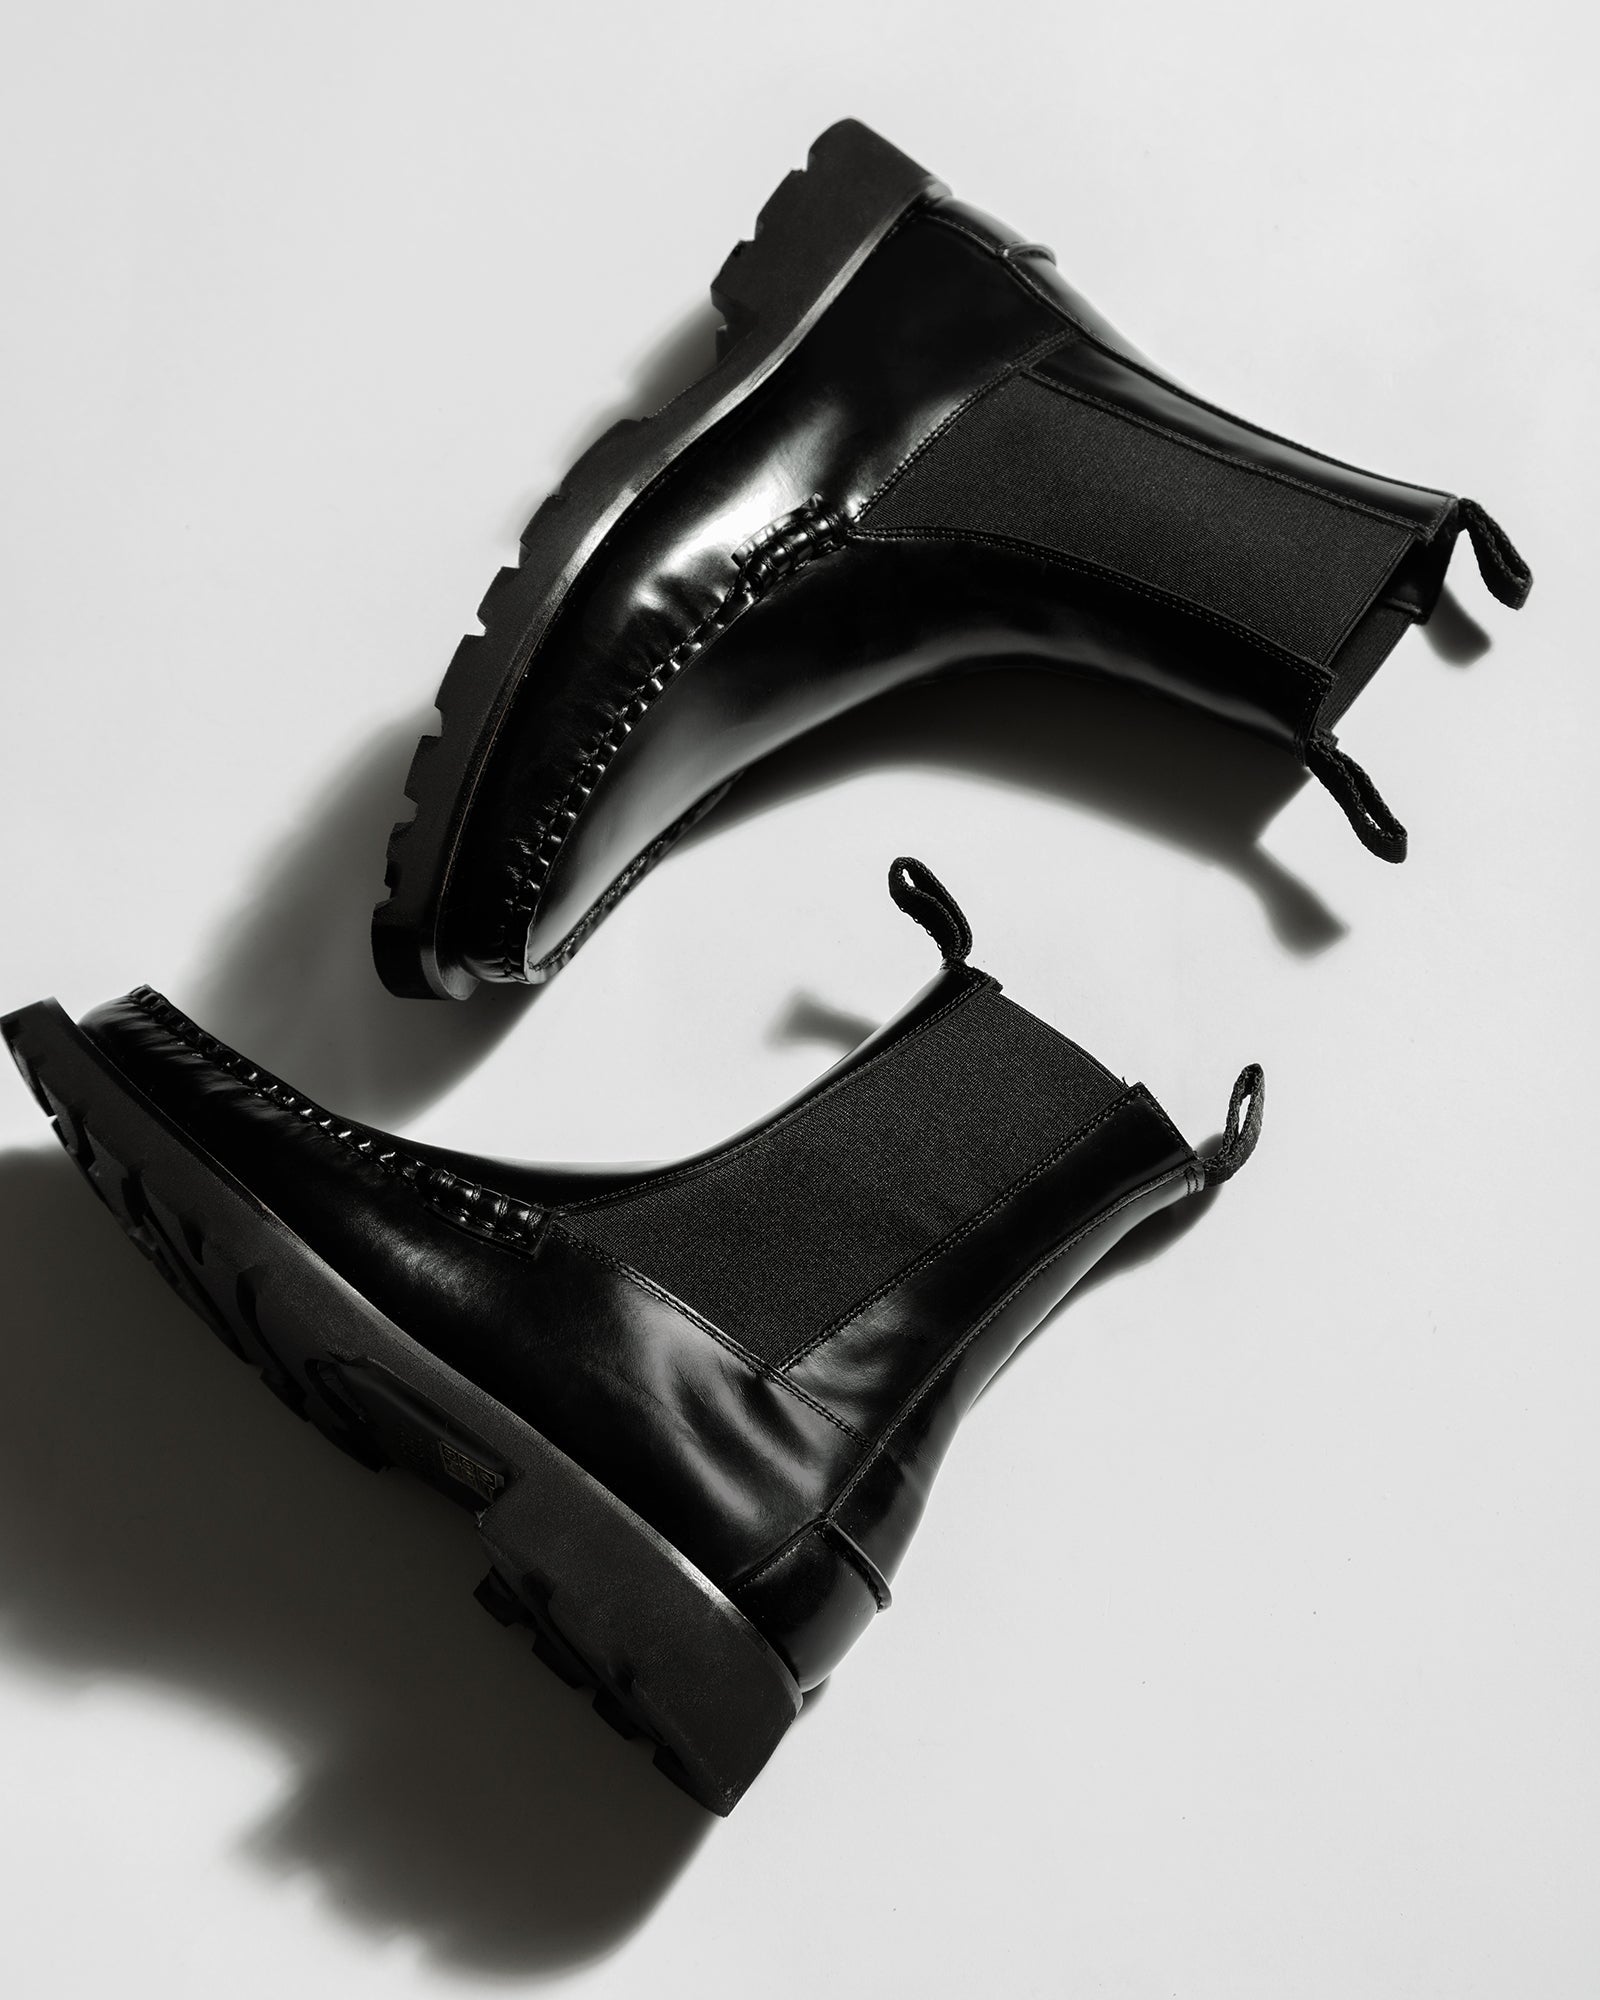 ALDA SPORT - FOR ALL - Chelsea Leather Boots – Hereu Studio